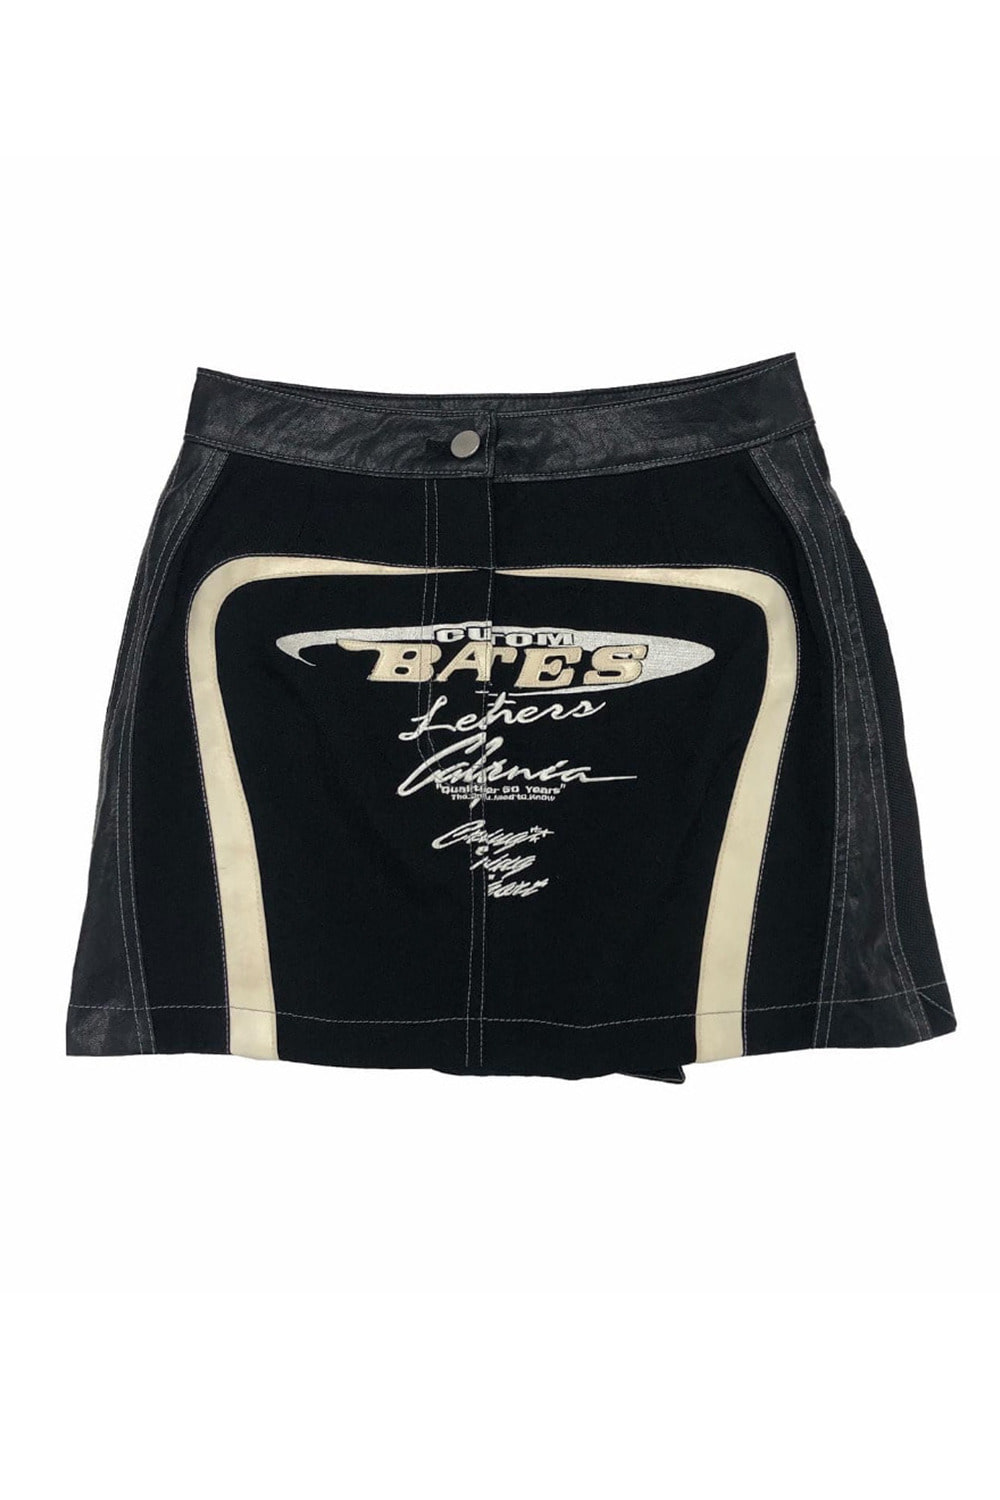 Bates racing jacket detail skirt